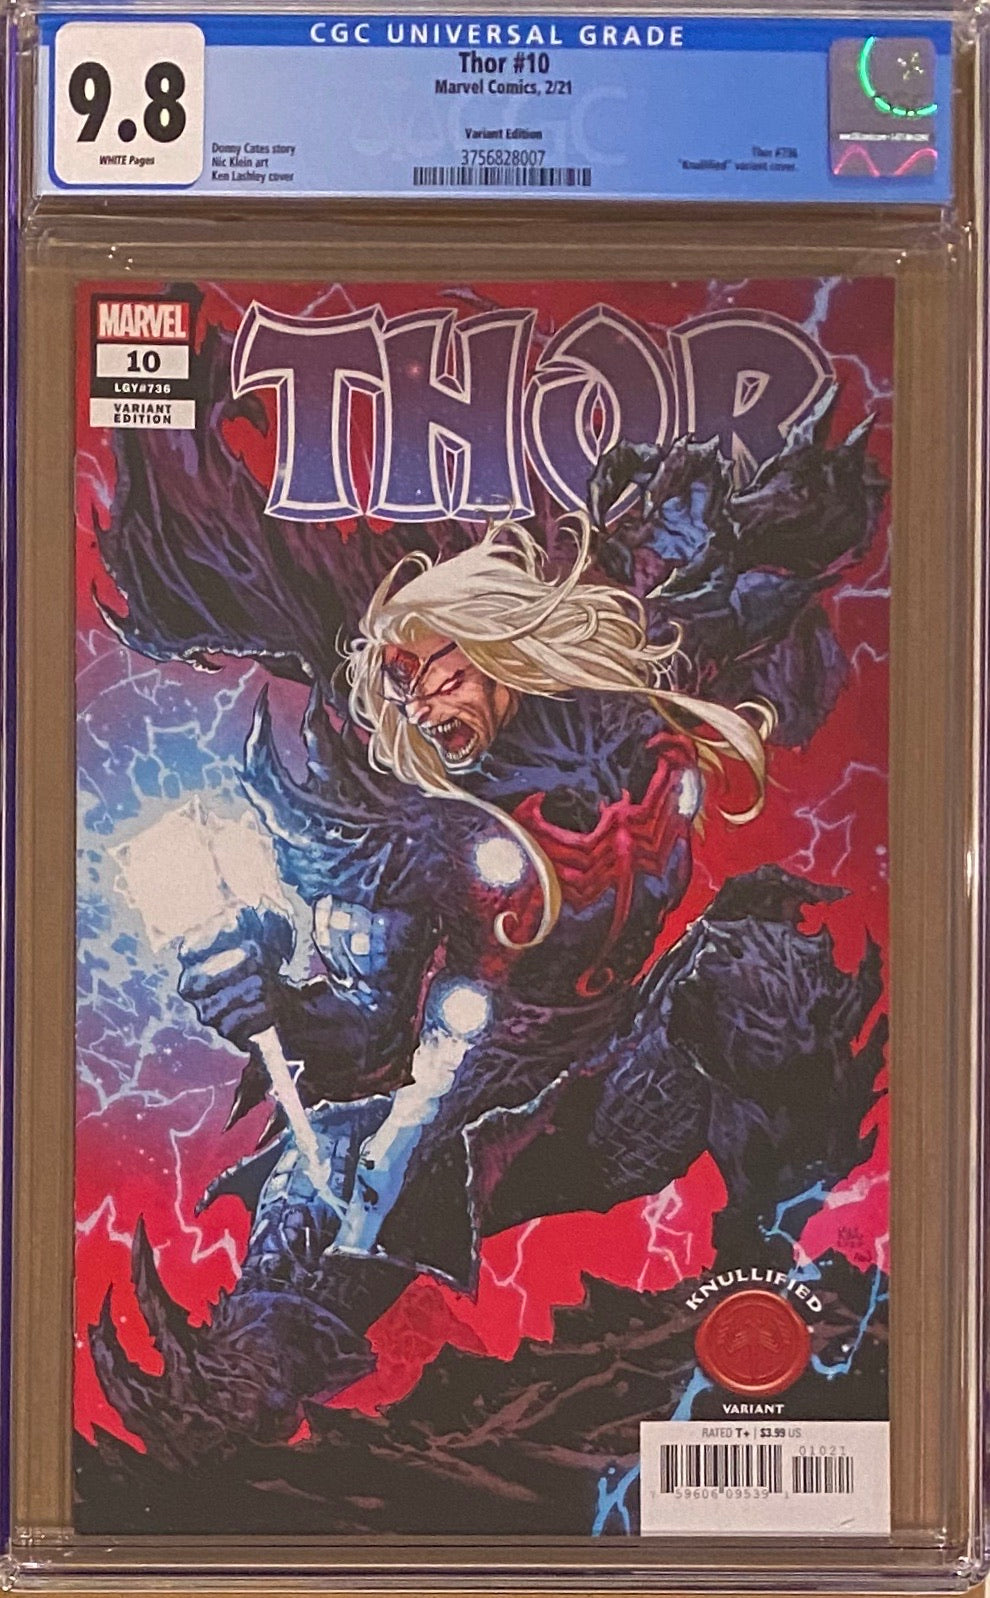 Thor #10 "Knullified" Variant CGC 9.8